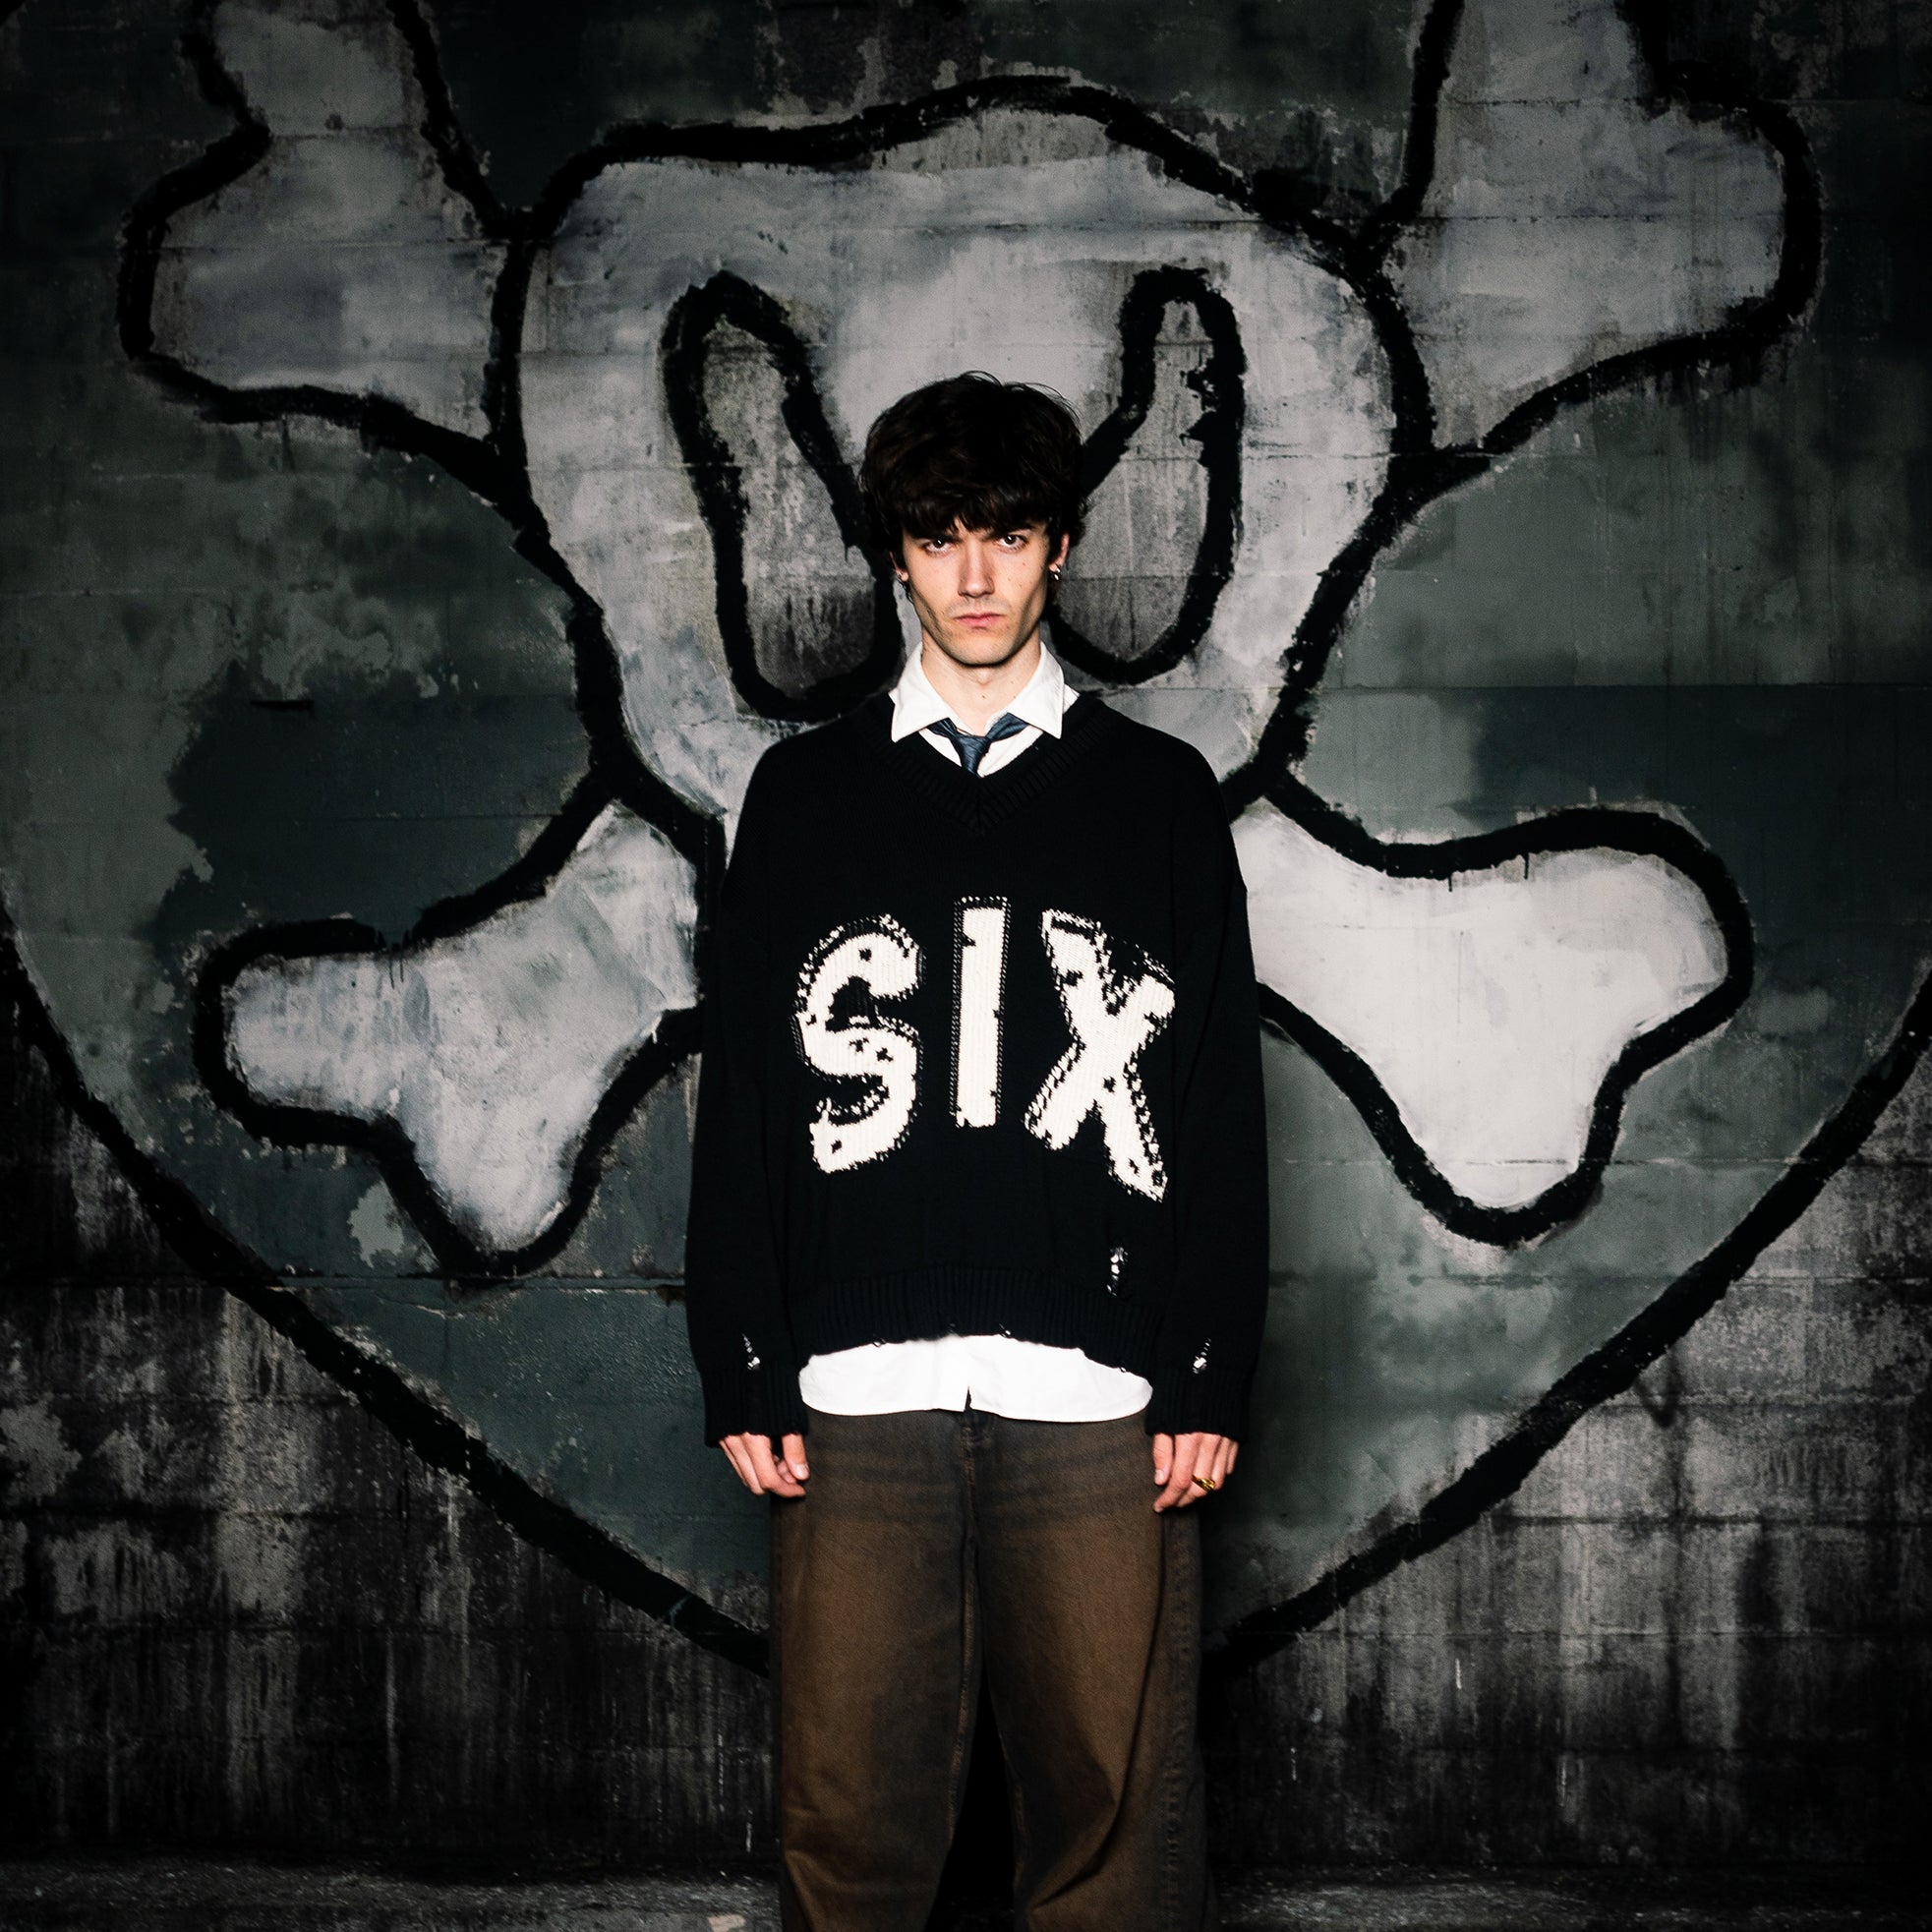 SIX sweater